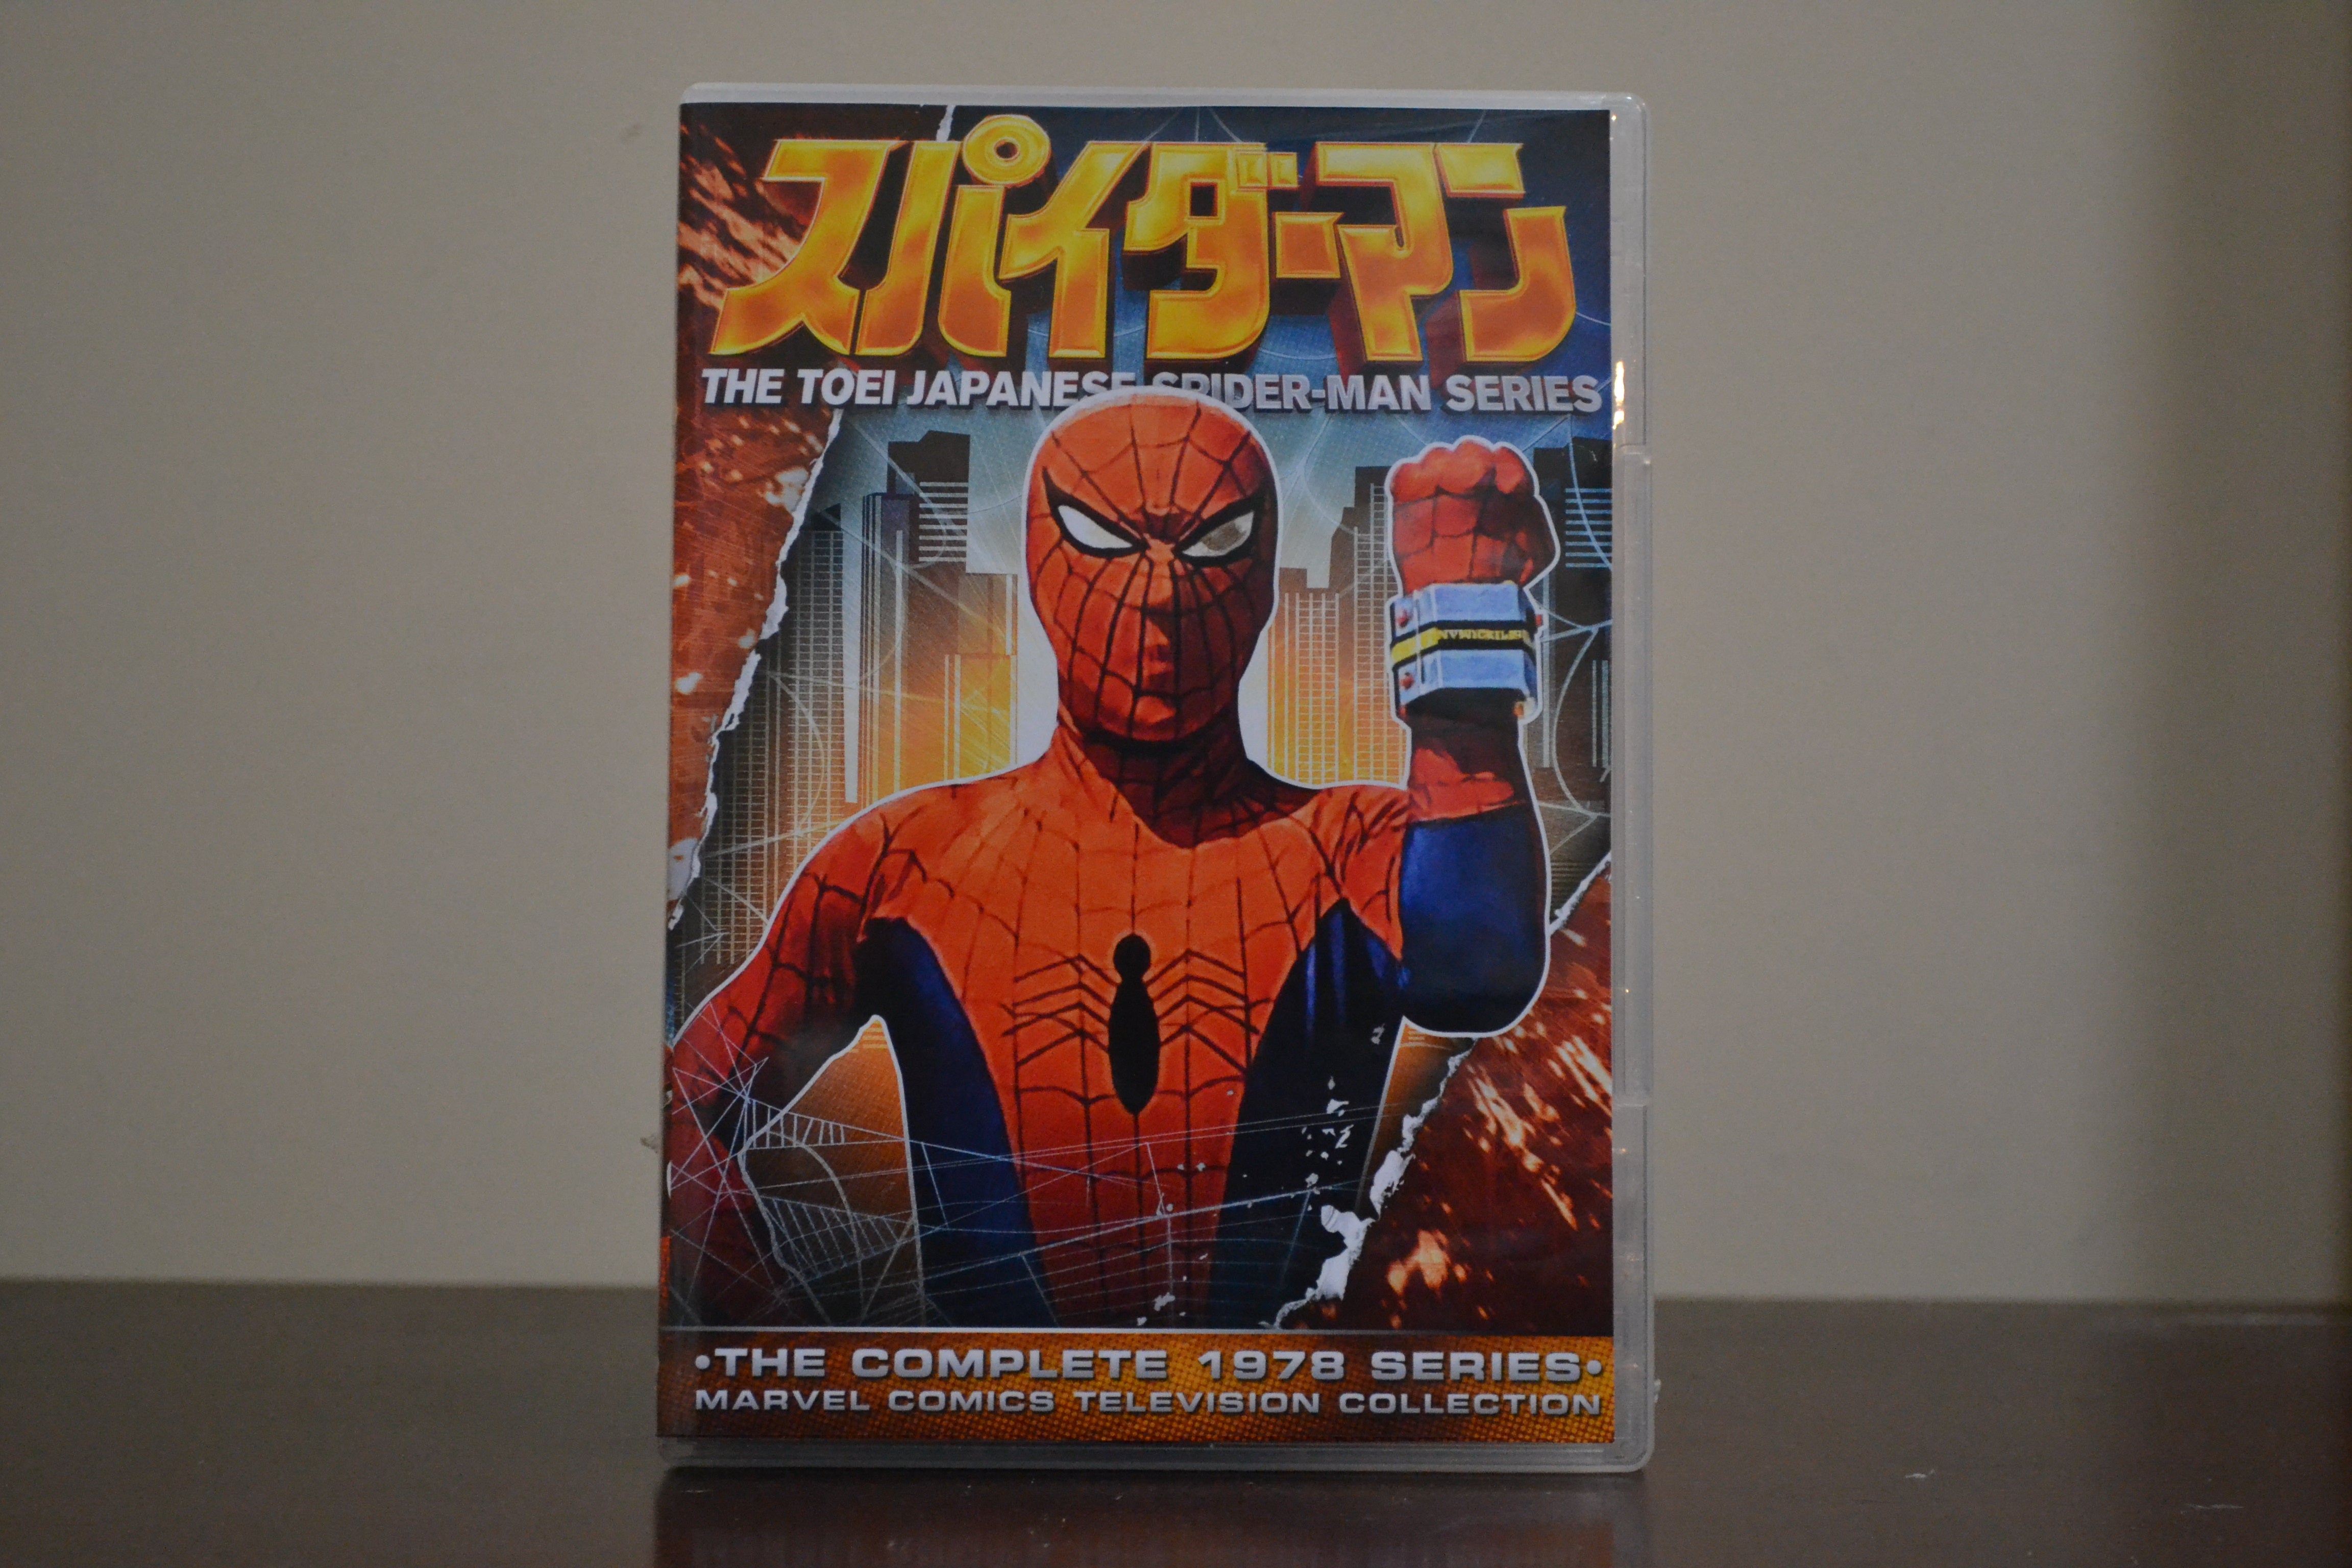 The Toei Japanese Spider-Man Series DvD Set